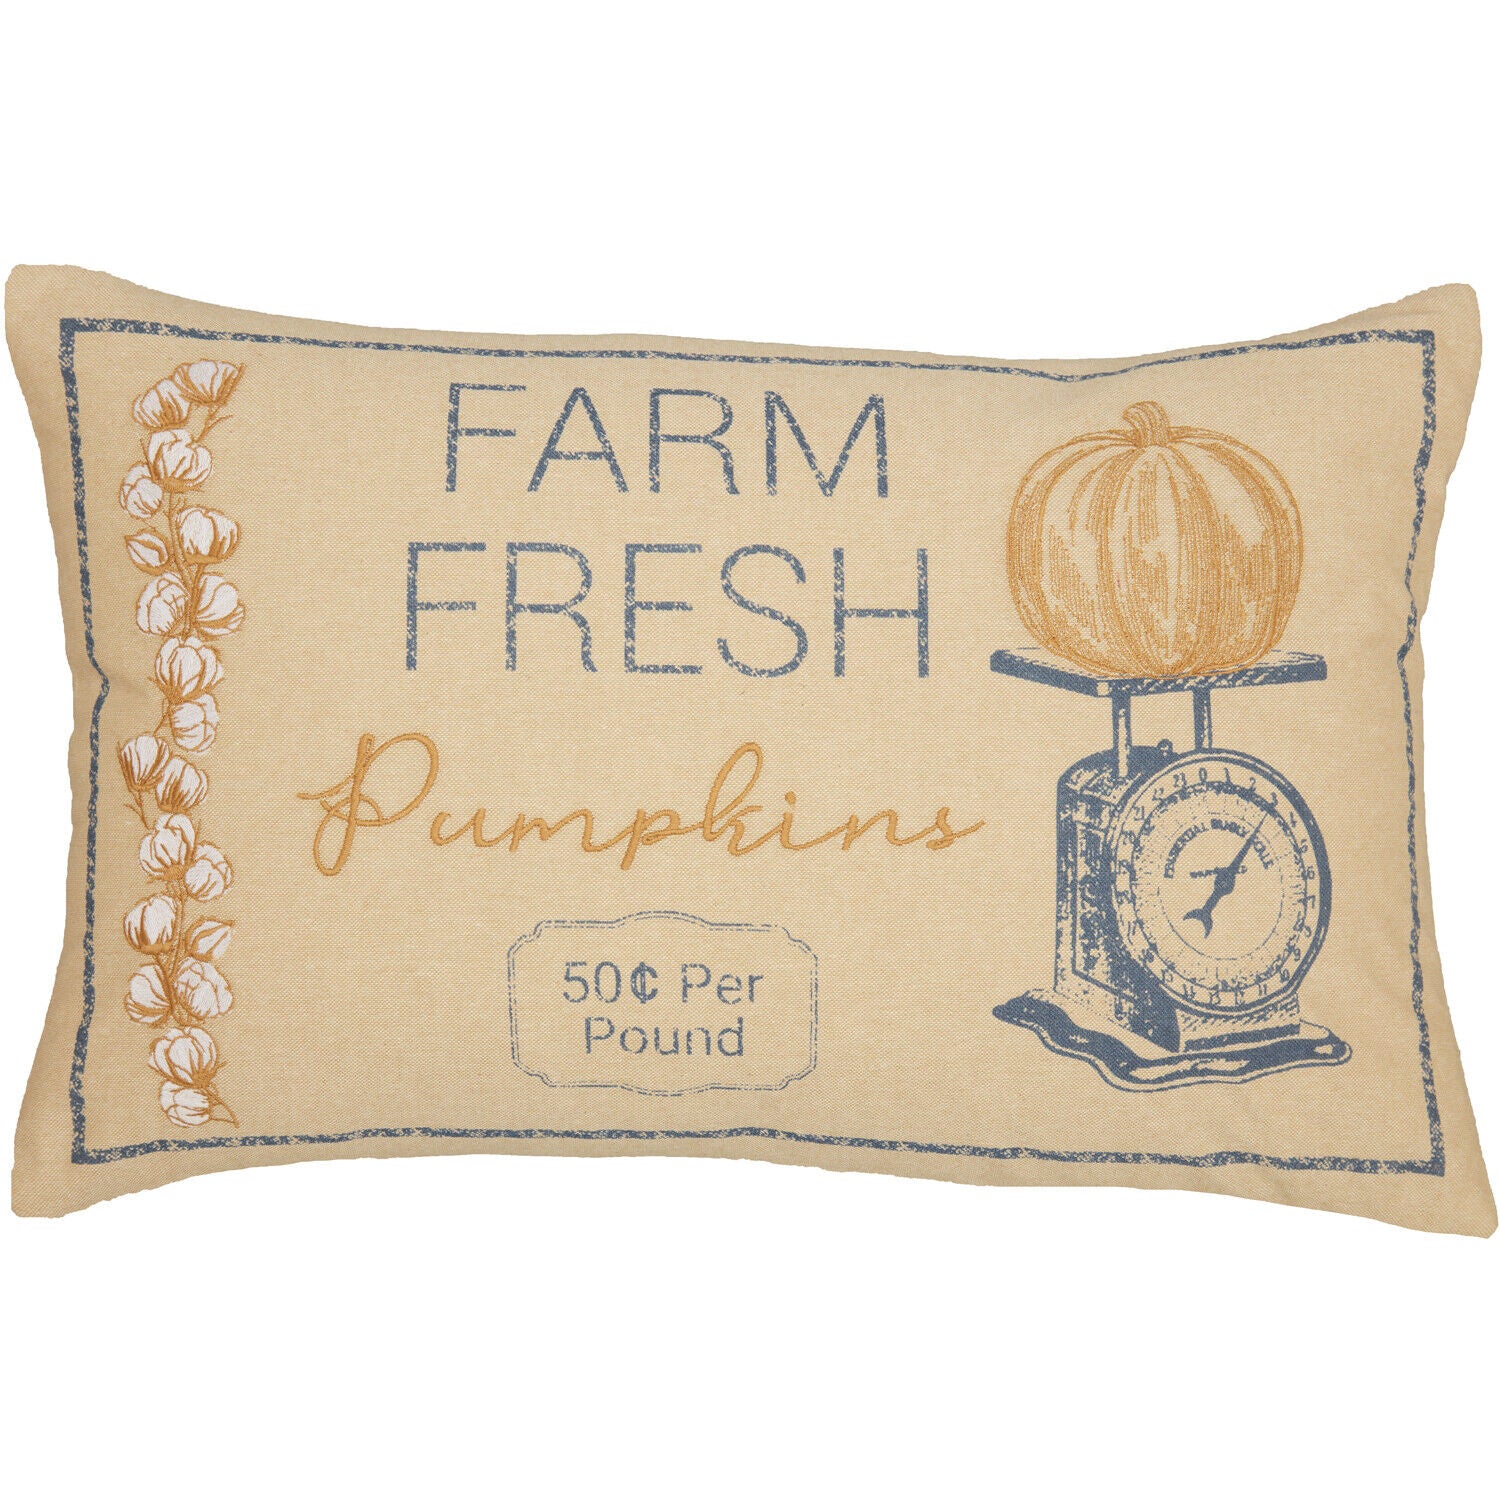 Primitive Farmhouse Fall Ashmont Pumpkin Scale Pillow 14X22 - The Primitive Pineapple Collection